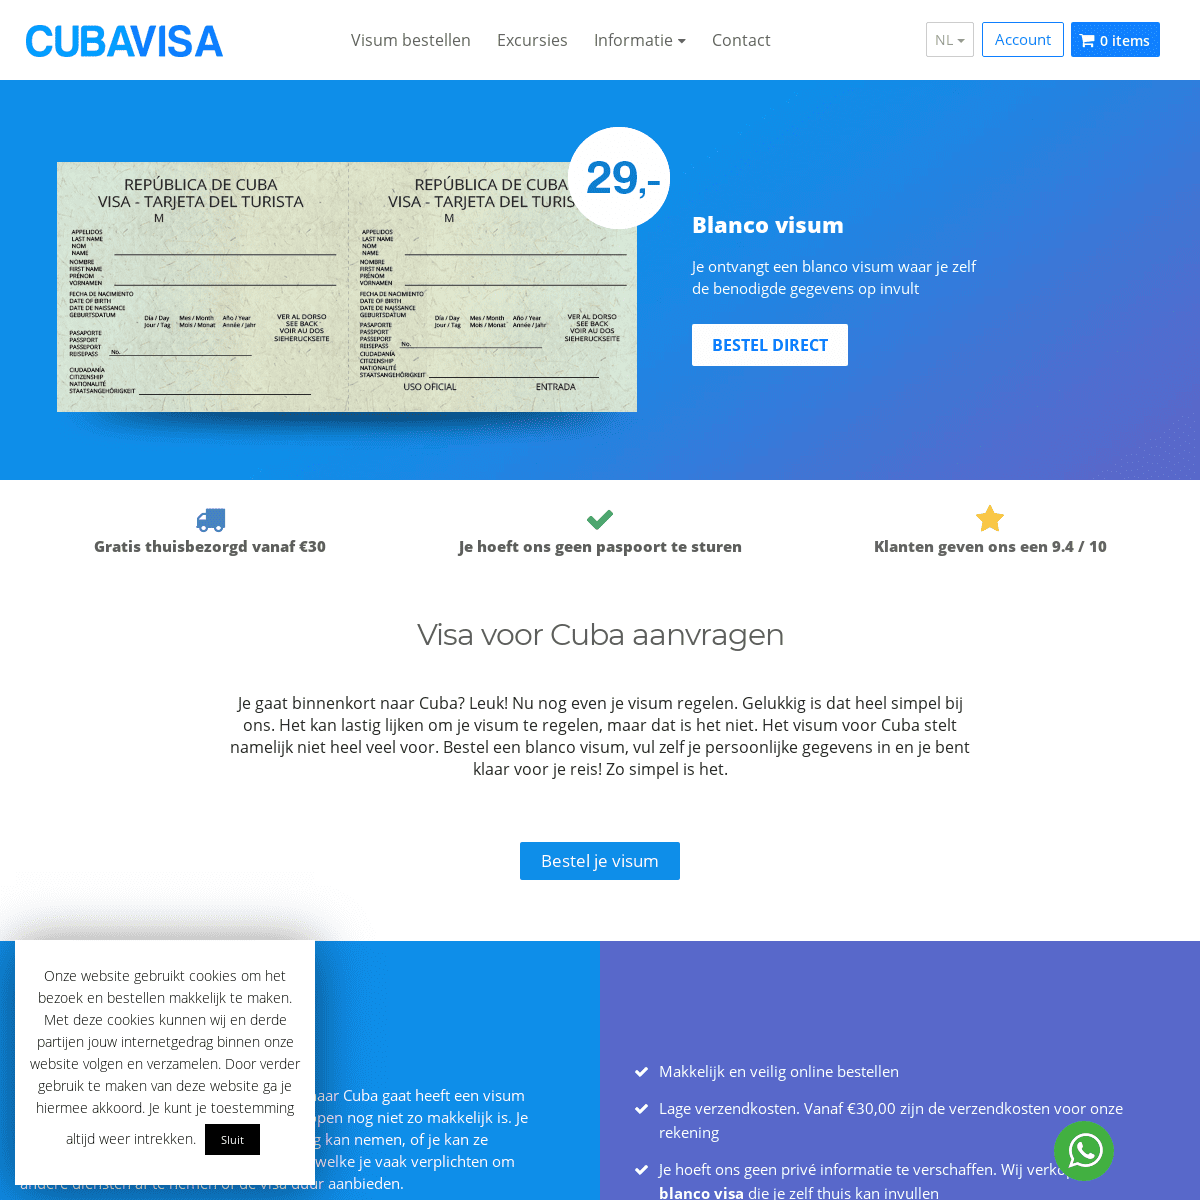 A complete backup of cubavisa.net